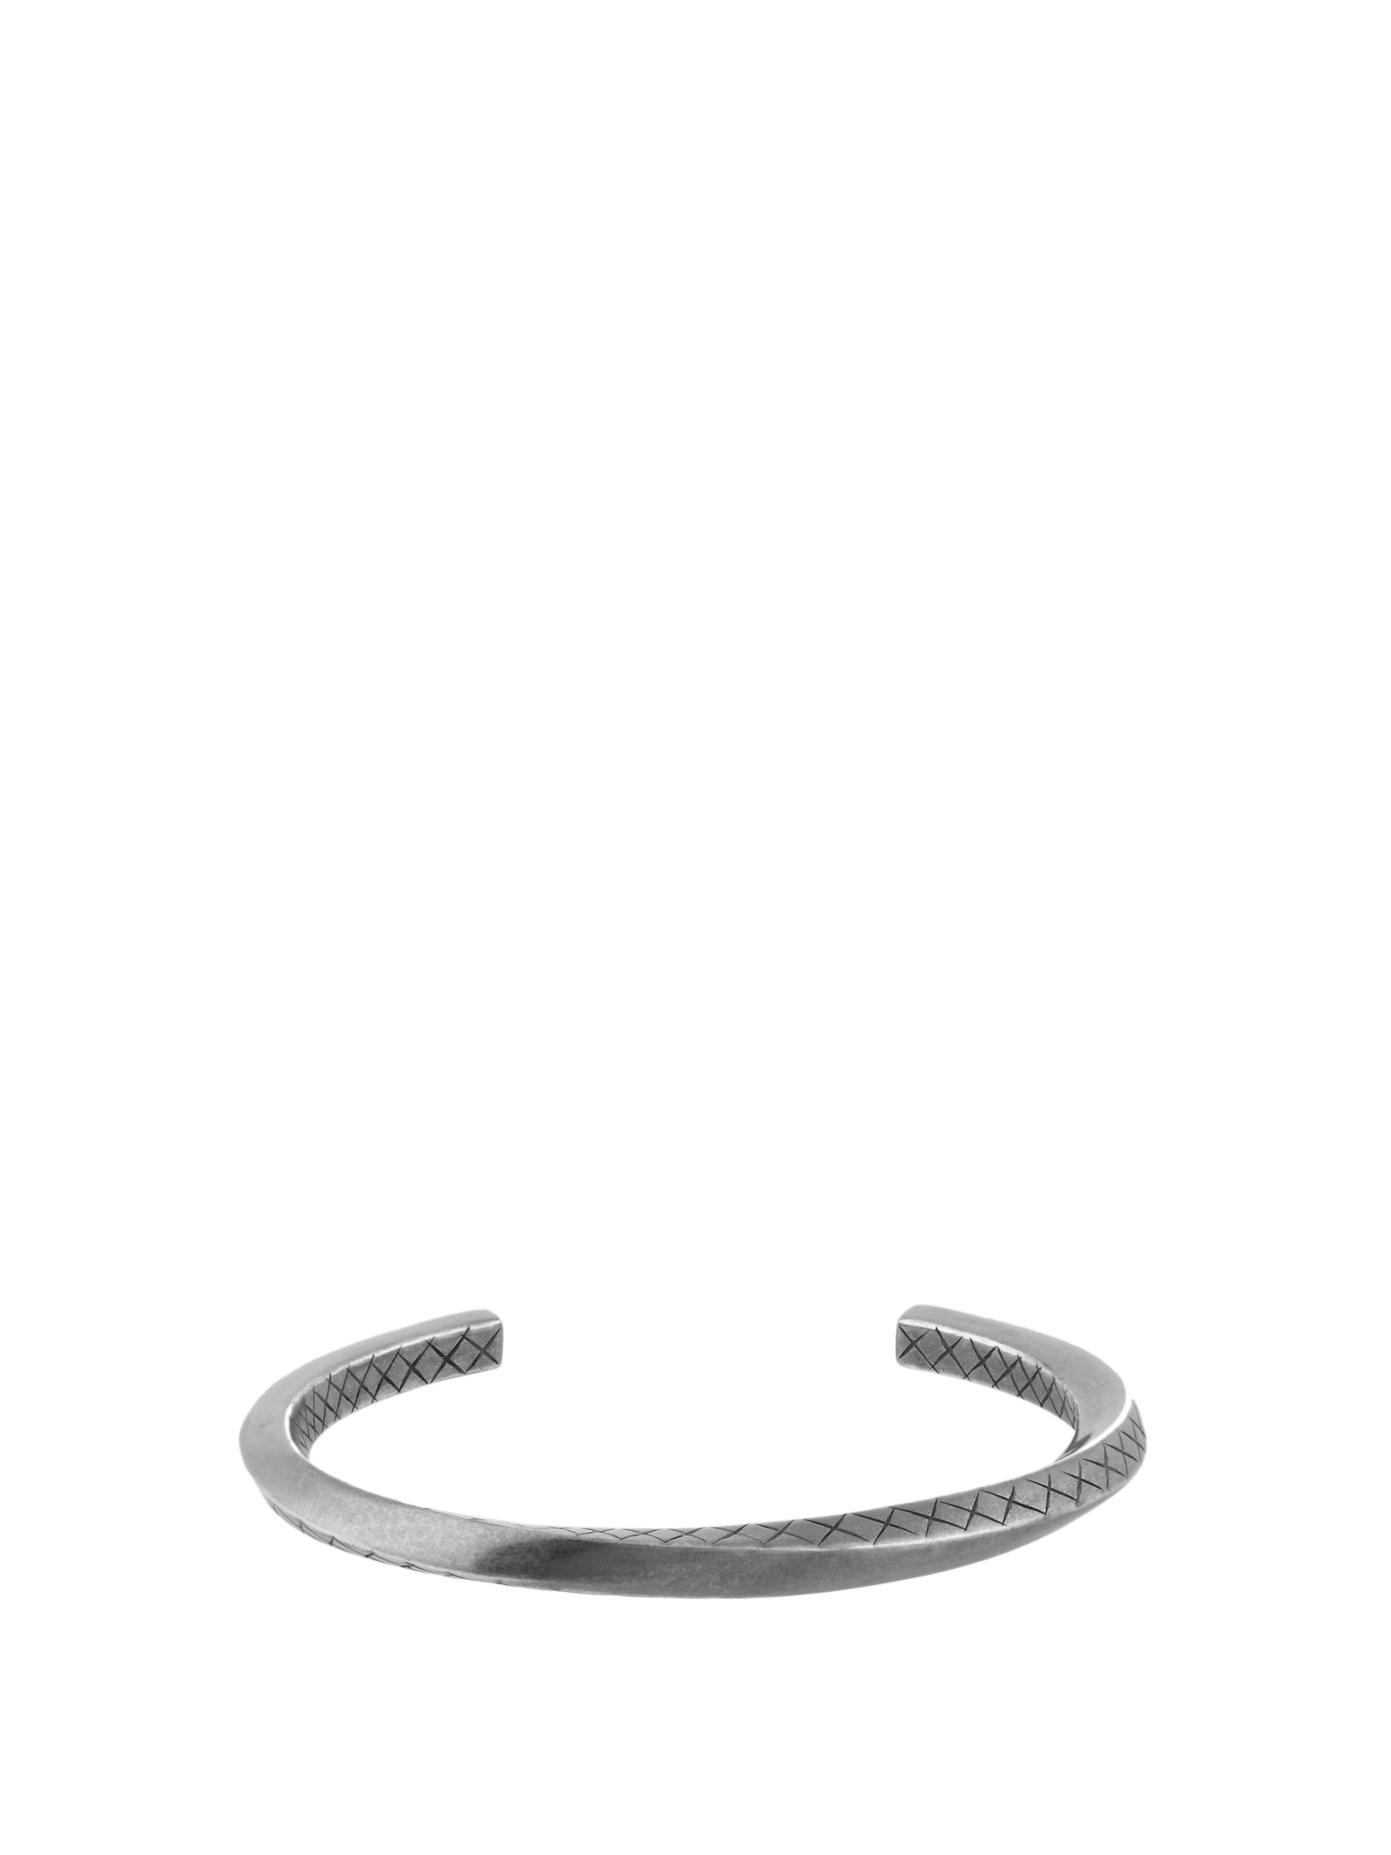 Bottega Veneta - Sterling Silver Chain Bracelet - Men - Silver - M